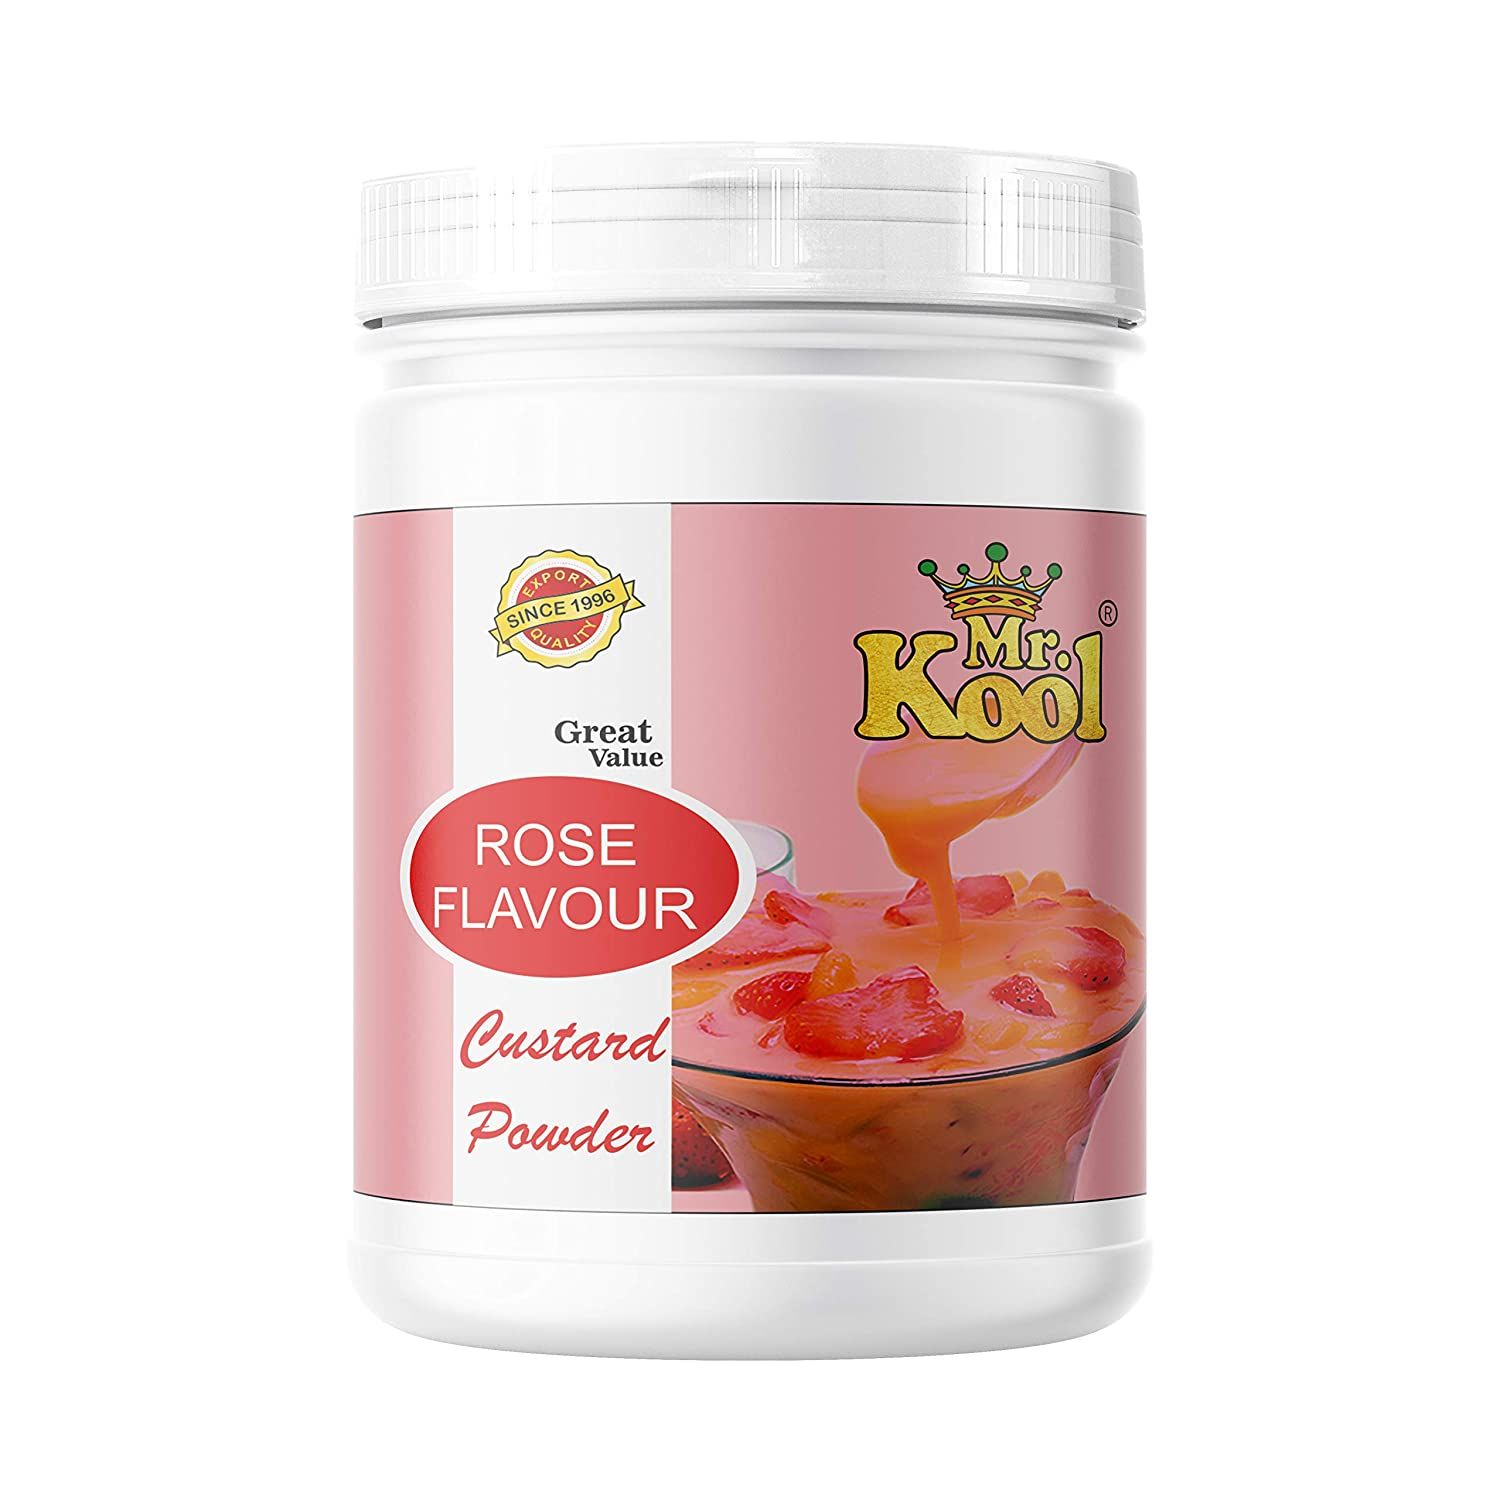 MR. KOOL Custard Powder Rose Flavor Image